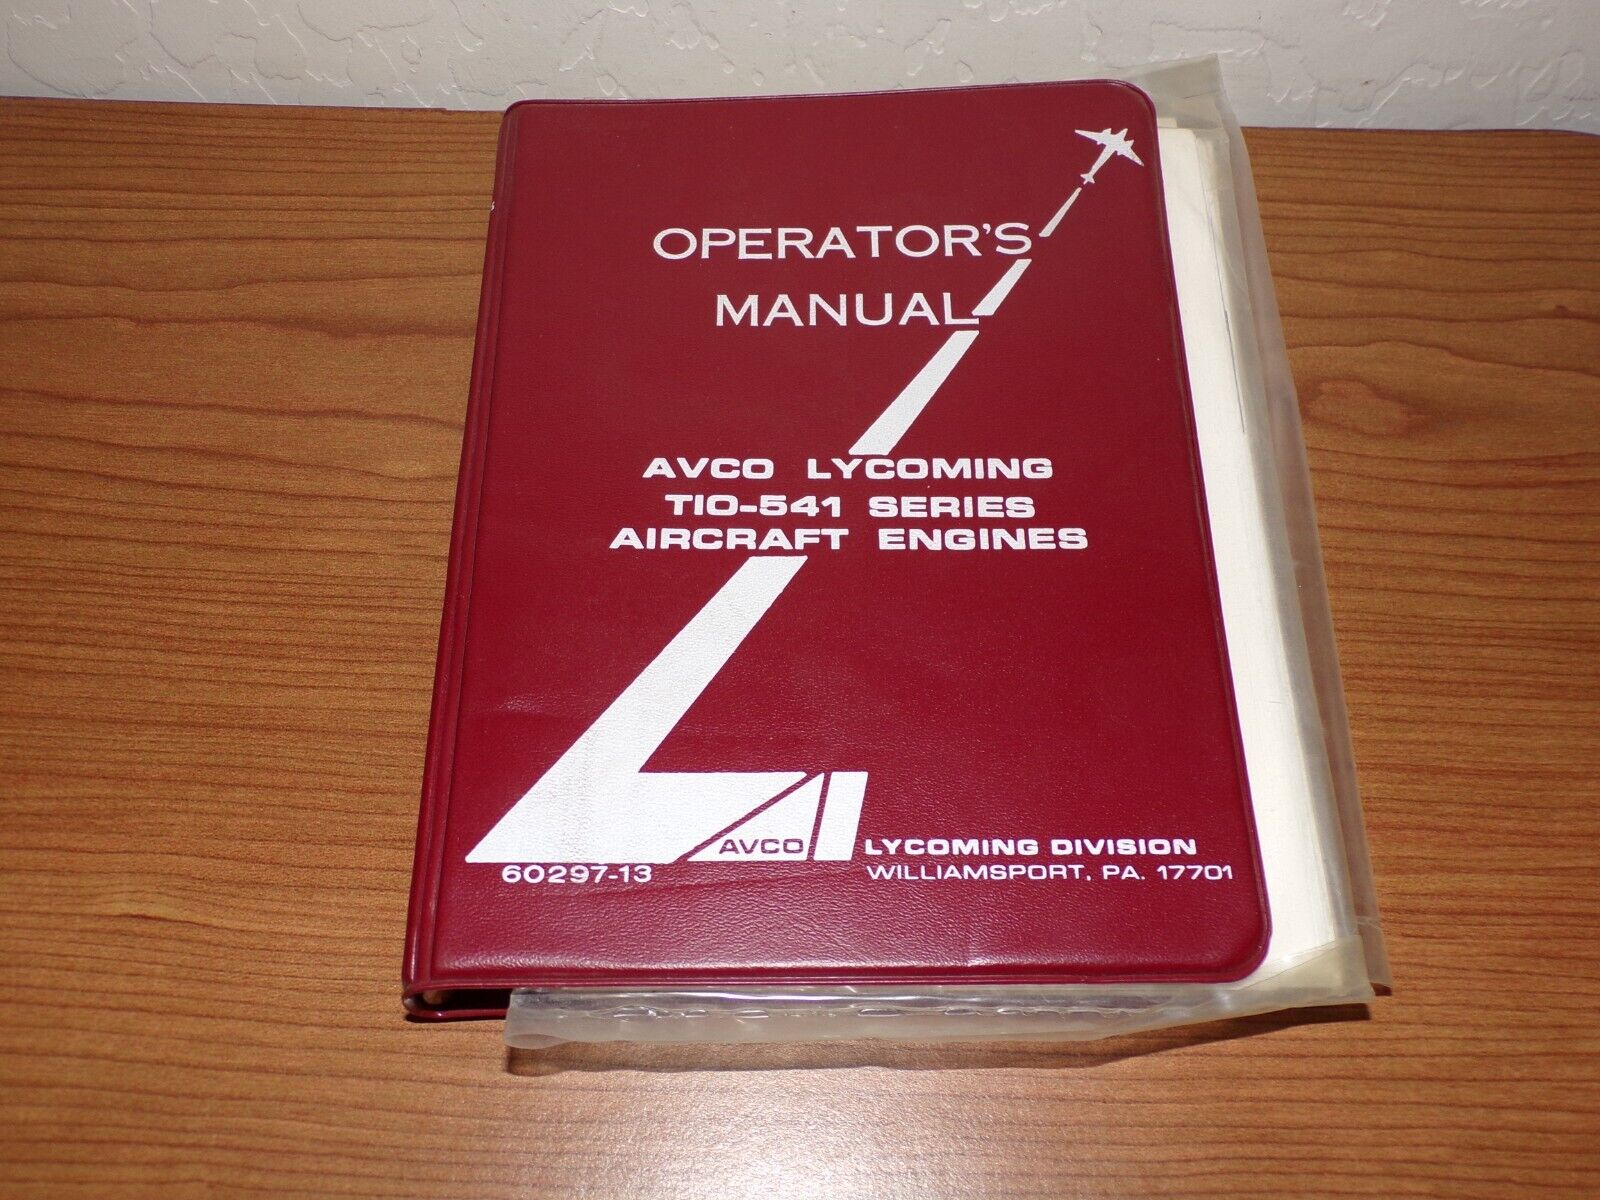 Avco Lycoming TIO-541 Operator\'s Manual 60297-13